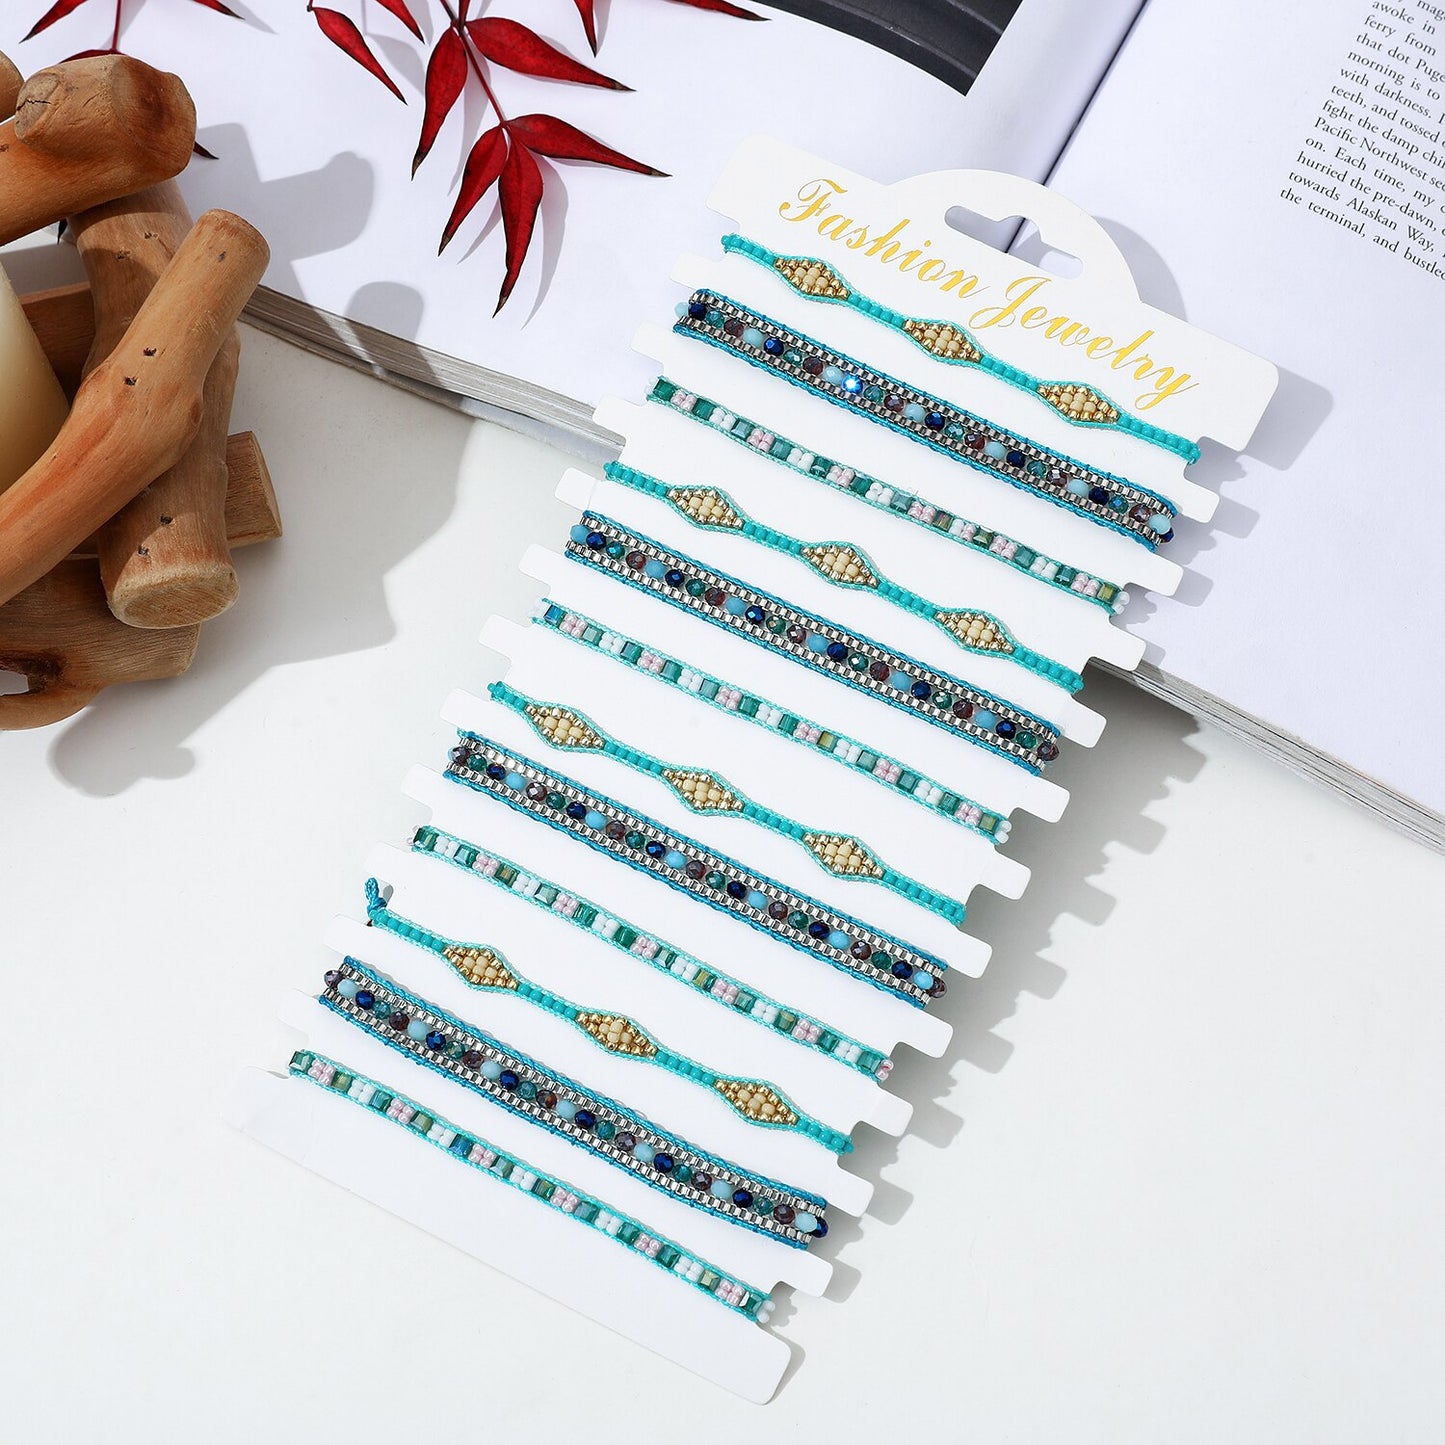 12pcs/lot Bohemia Woman Men Handmade Weave Adjustable Rope Chain Crystal Charms Bracelets Wrap Bangle Wristband Fashion Jewelry